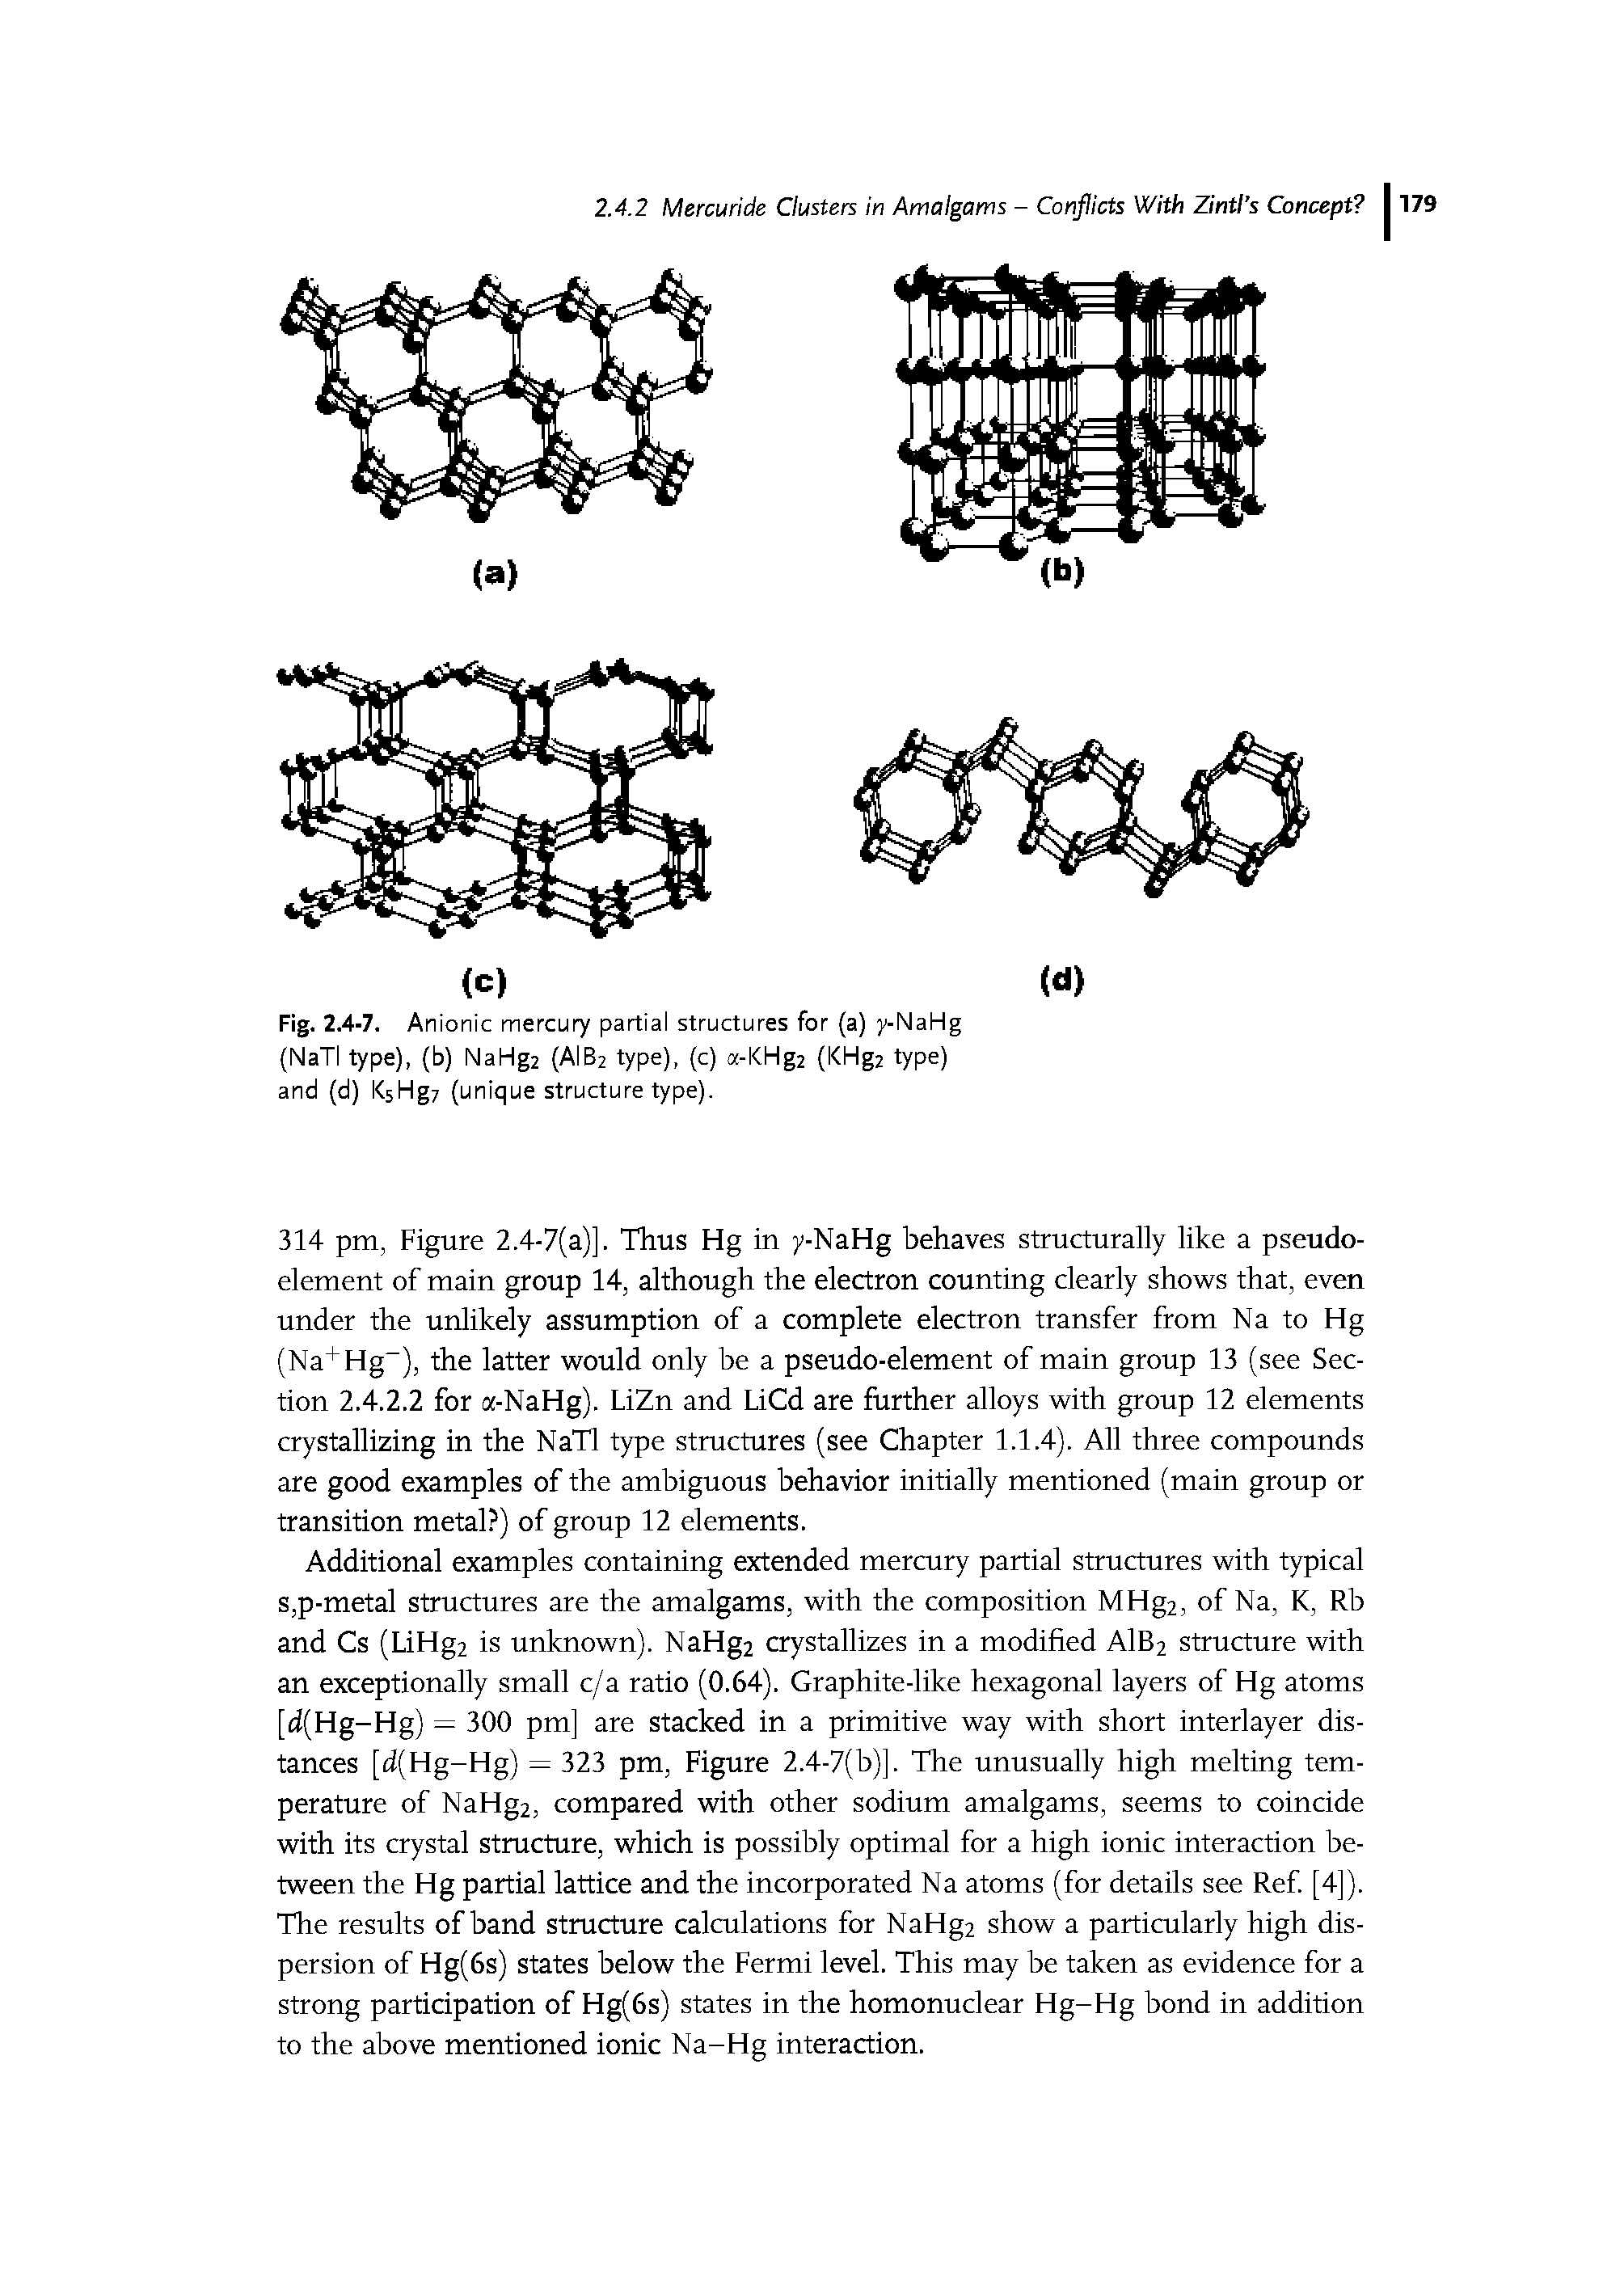 Fig. 2.4-7. Anionic mercury partial structures for (a) y-NaHg (NaTI type), (b) NaHg2 (AIB2 type), (c) a-KHg2 (KHg2 type) and (d) l<5Hg7 (unique structure type).